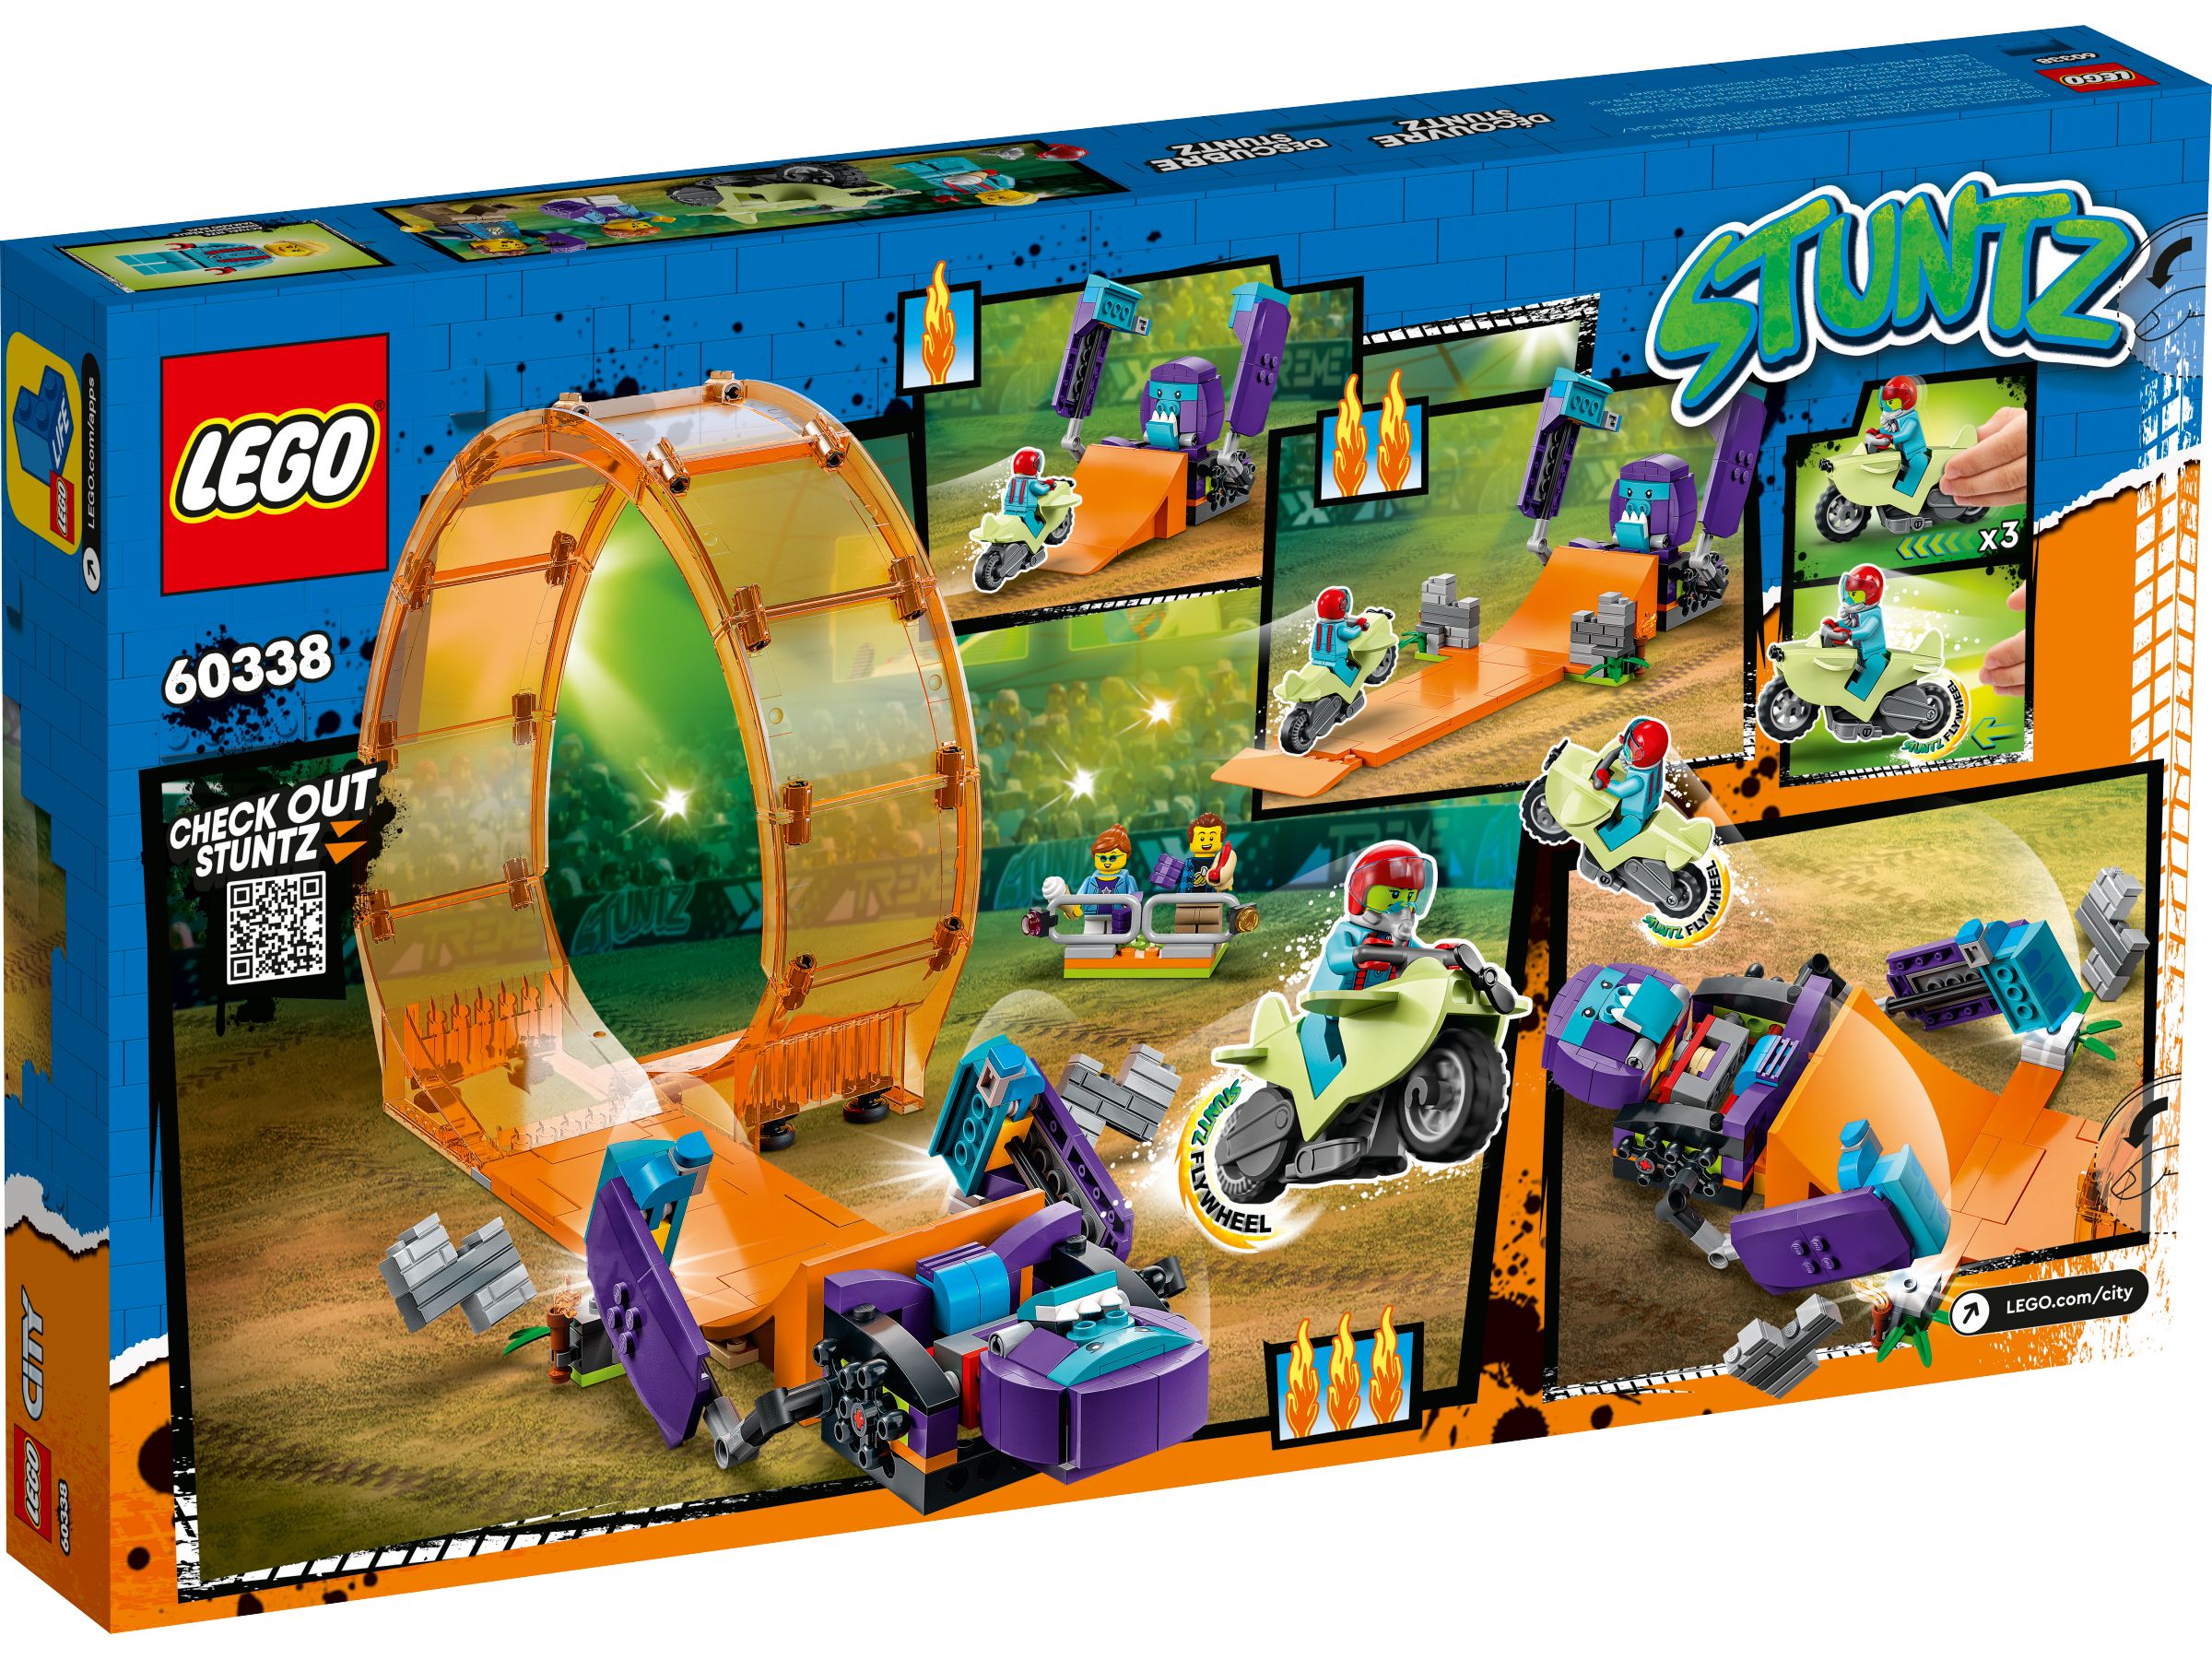 LEGO City 60338 Schimpansen-Stuntlooping LEGO_60338_alt7.jpg